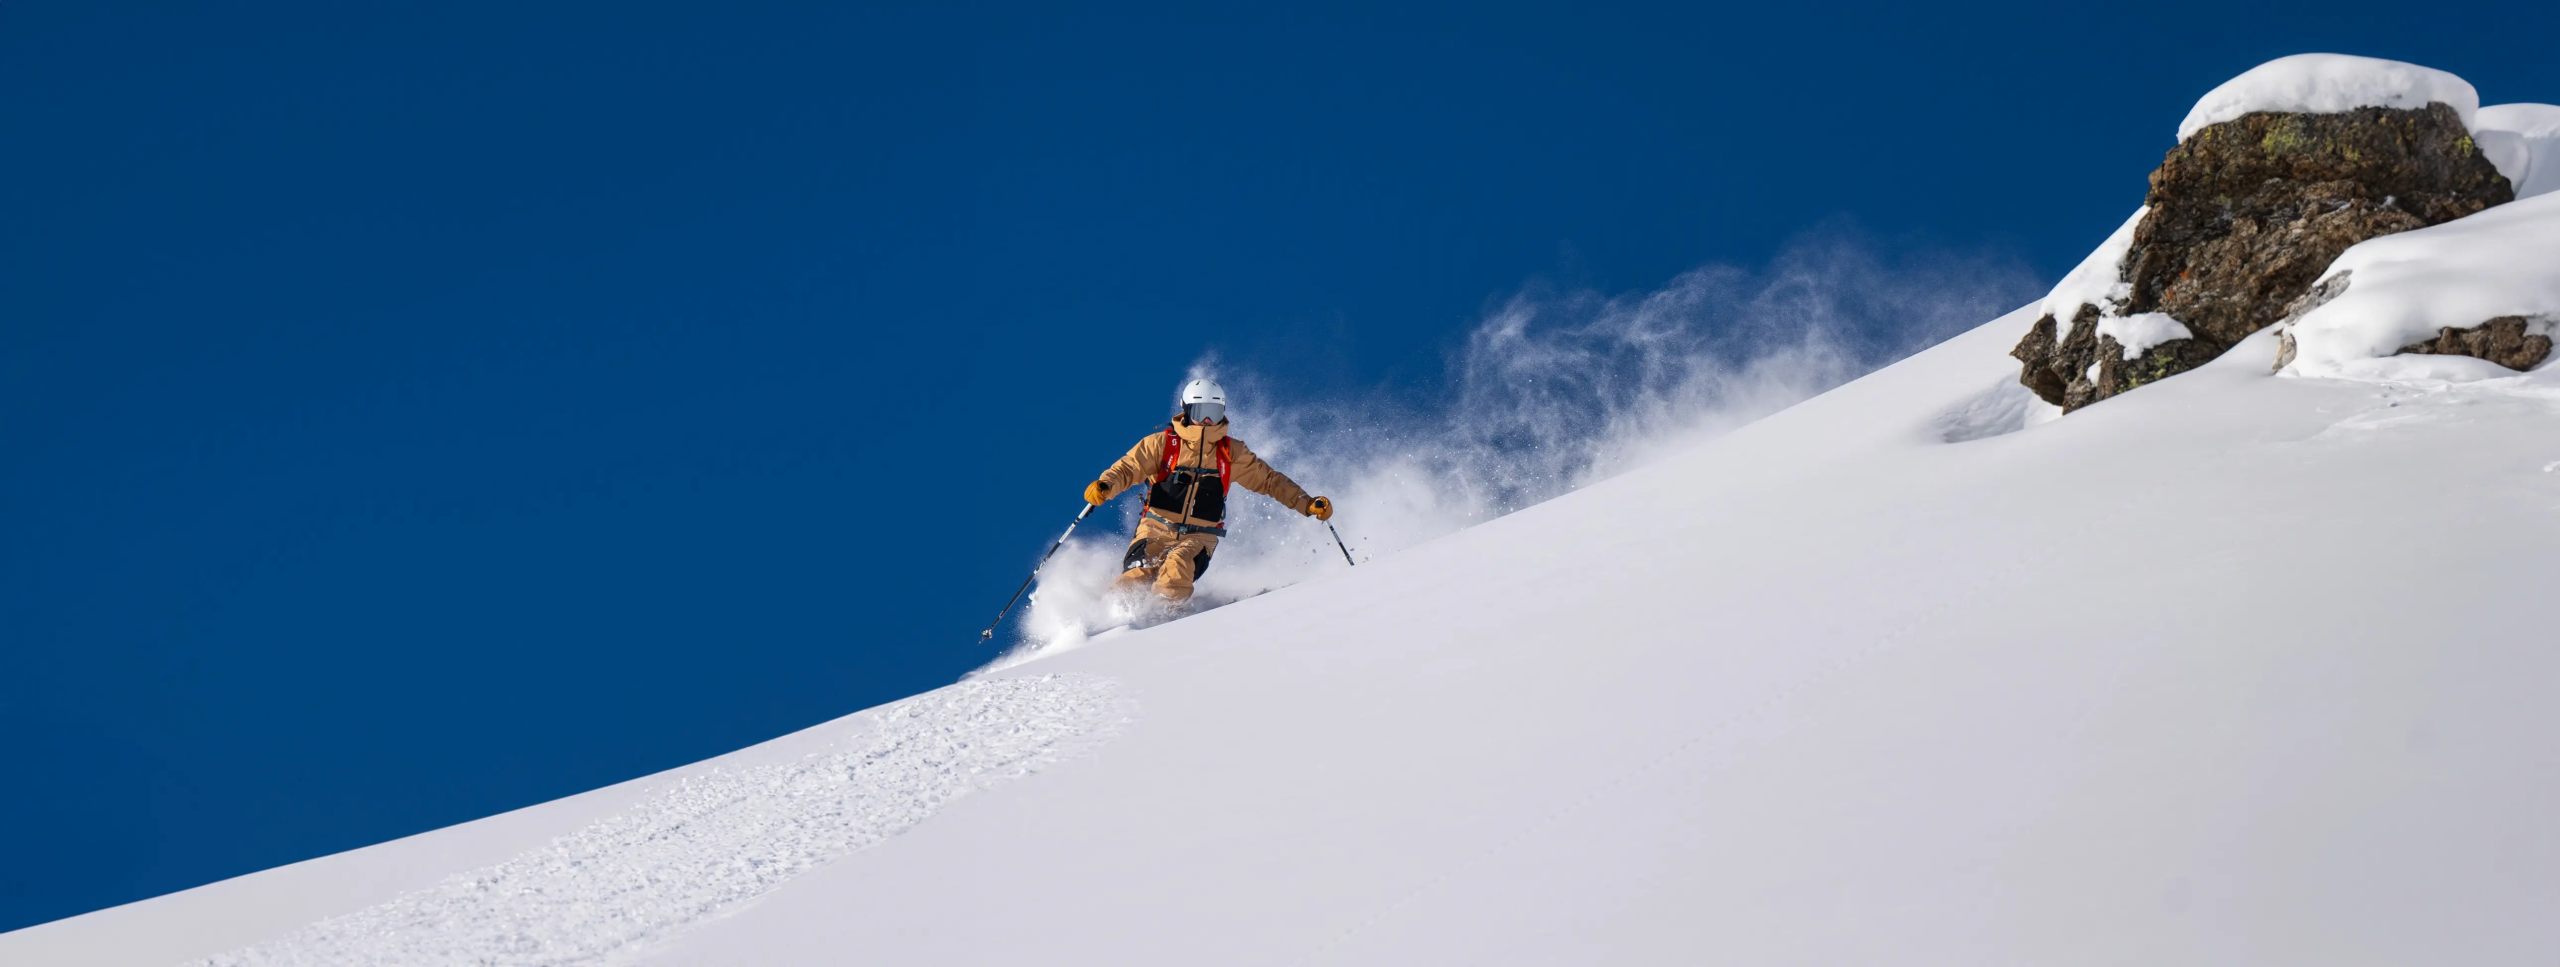 Val Thorens Ski Resort: Find Val Thorens, France Skiing & Ski